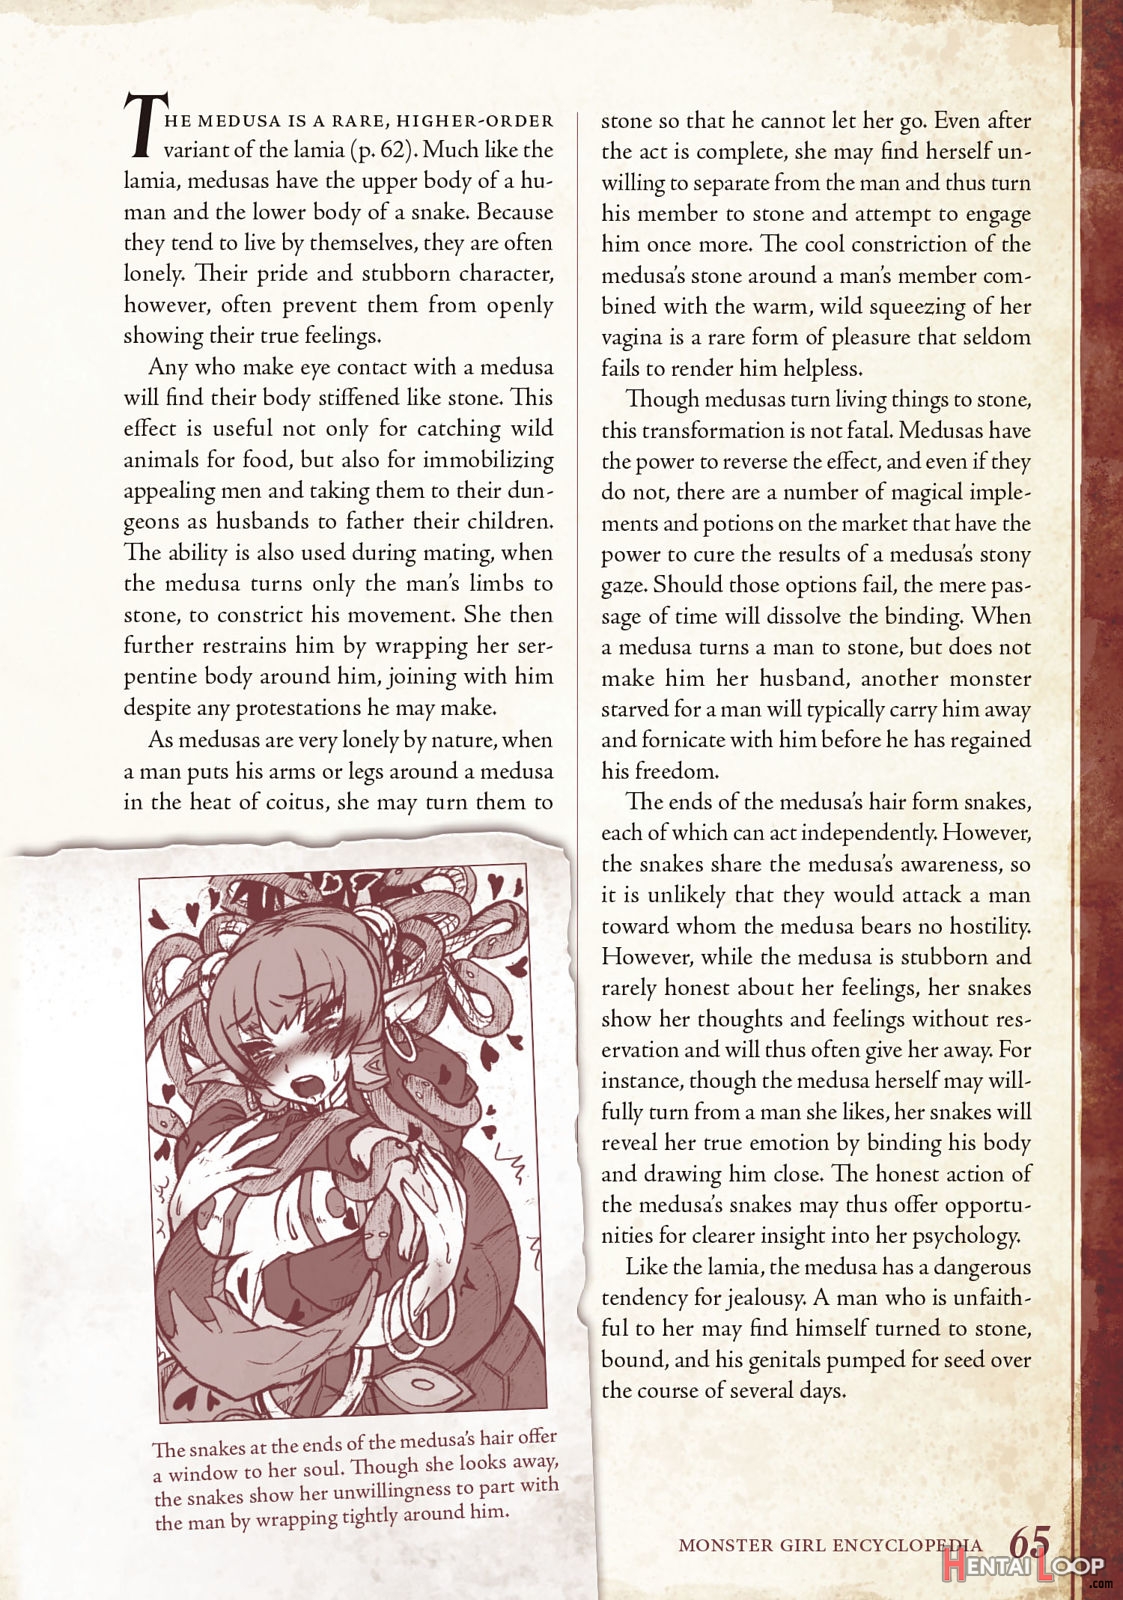 Monster Girl Encyclopedia Vol. 1 page 66